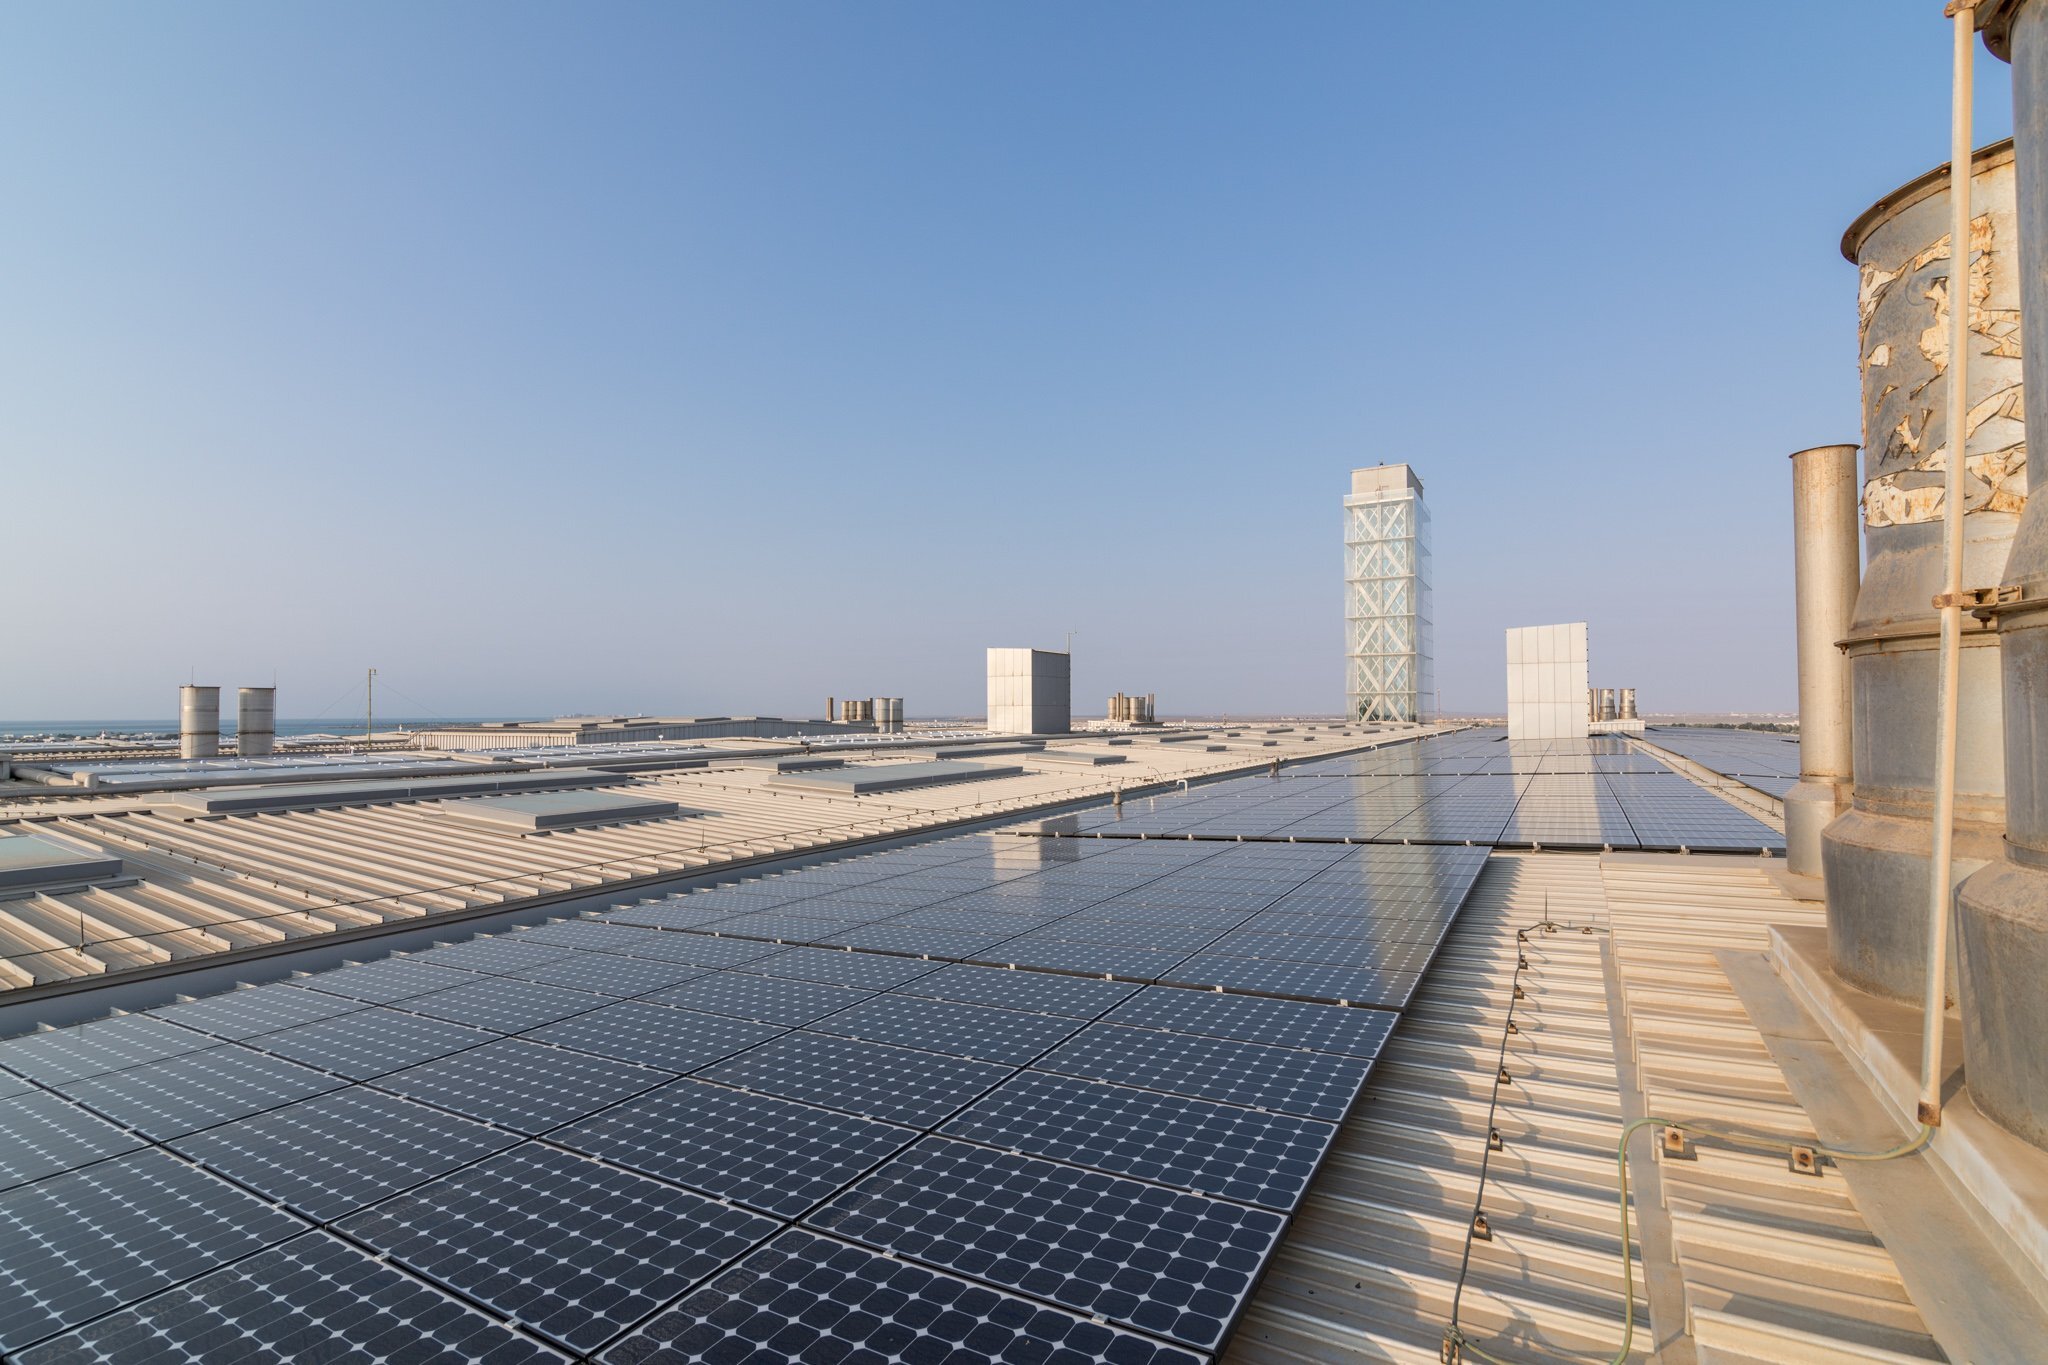 Balancing renewable energy systems in Saudi buildings